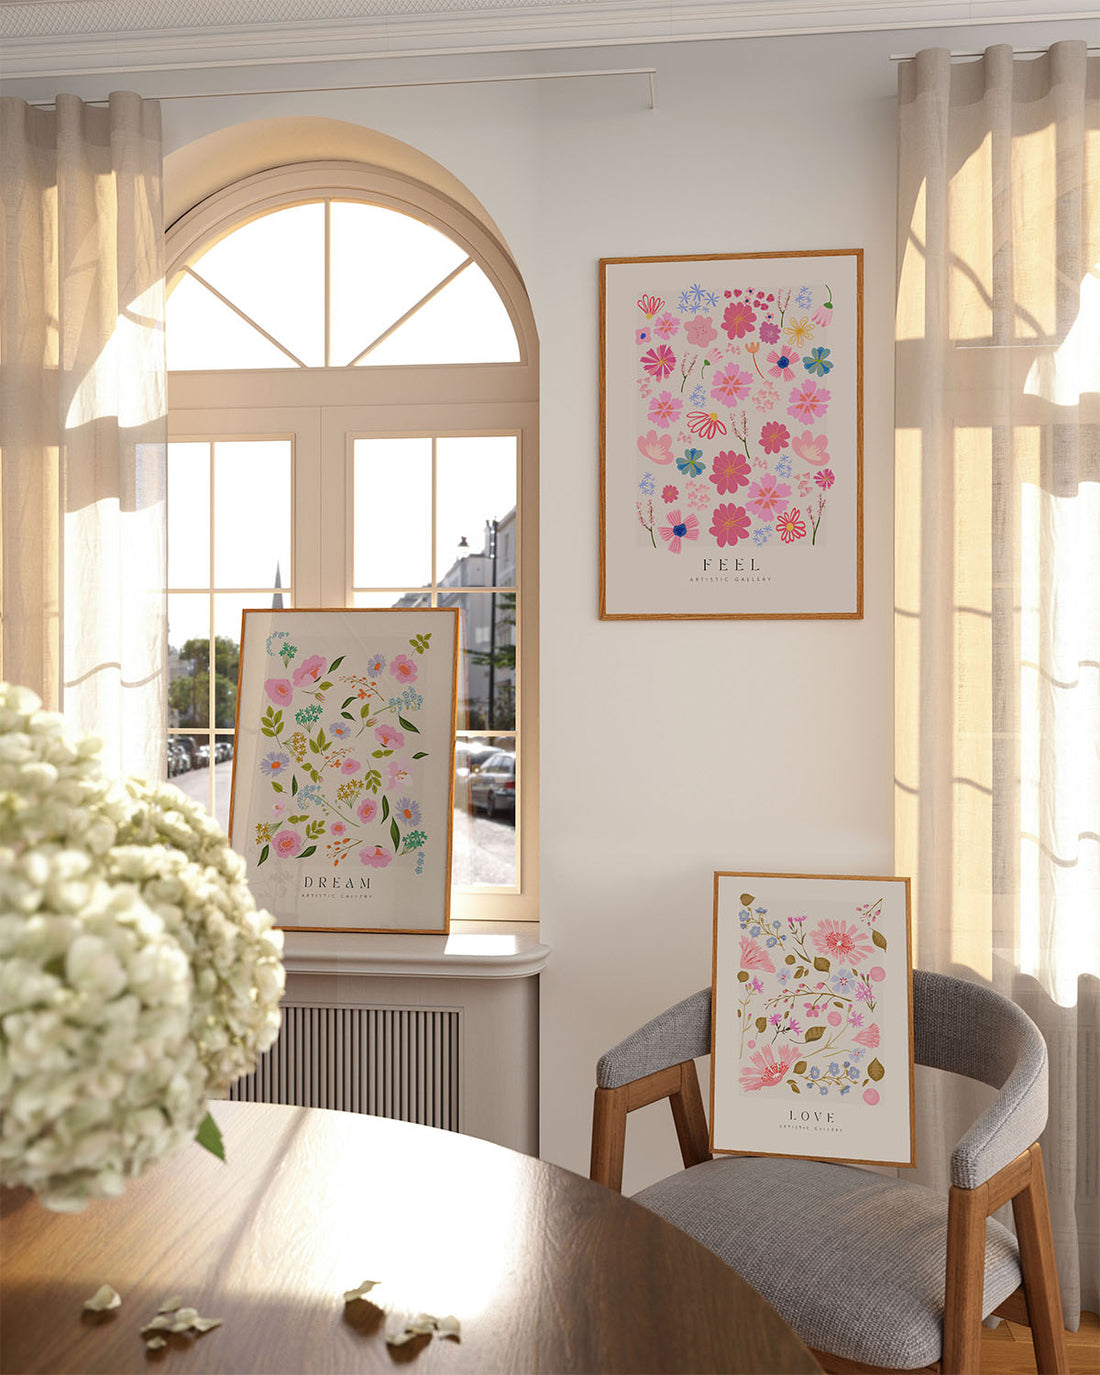 Set of 3 Wild Flowers Dream Feel Love Poster. Preppy Aesthetic Pastel Pink Wall Art